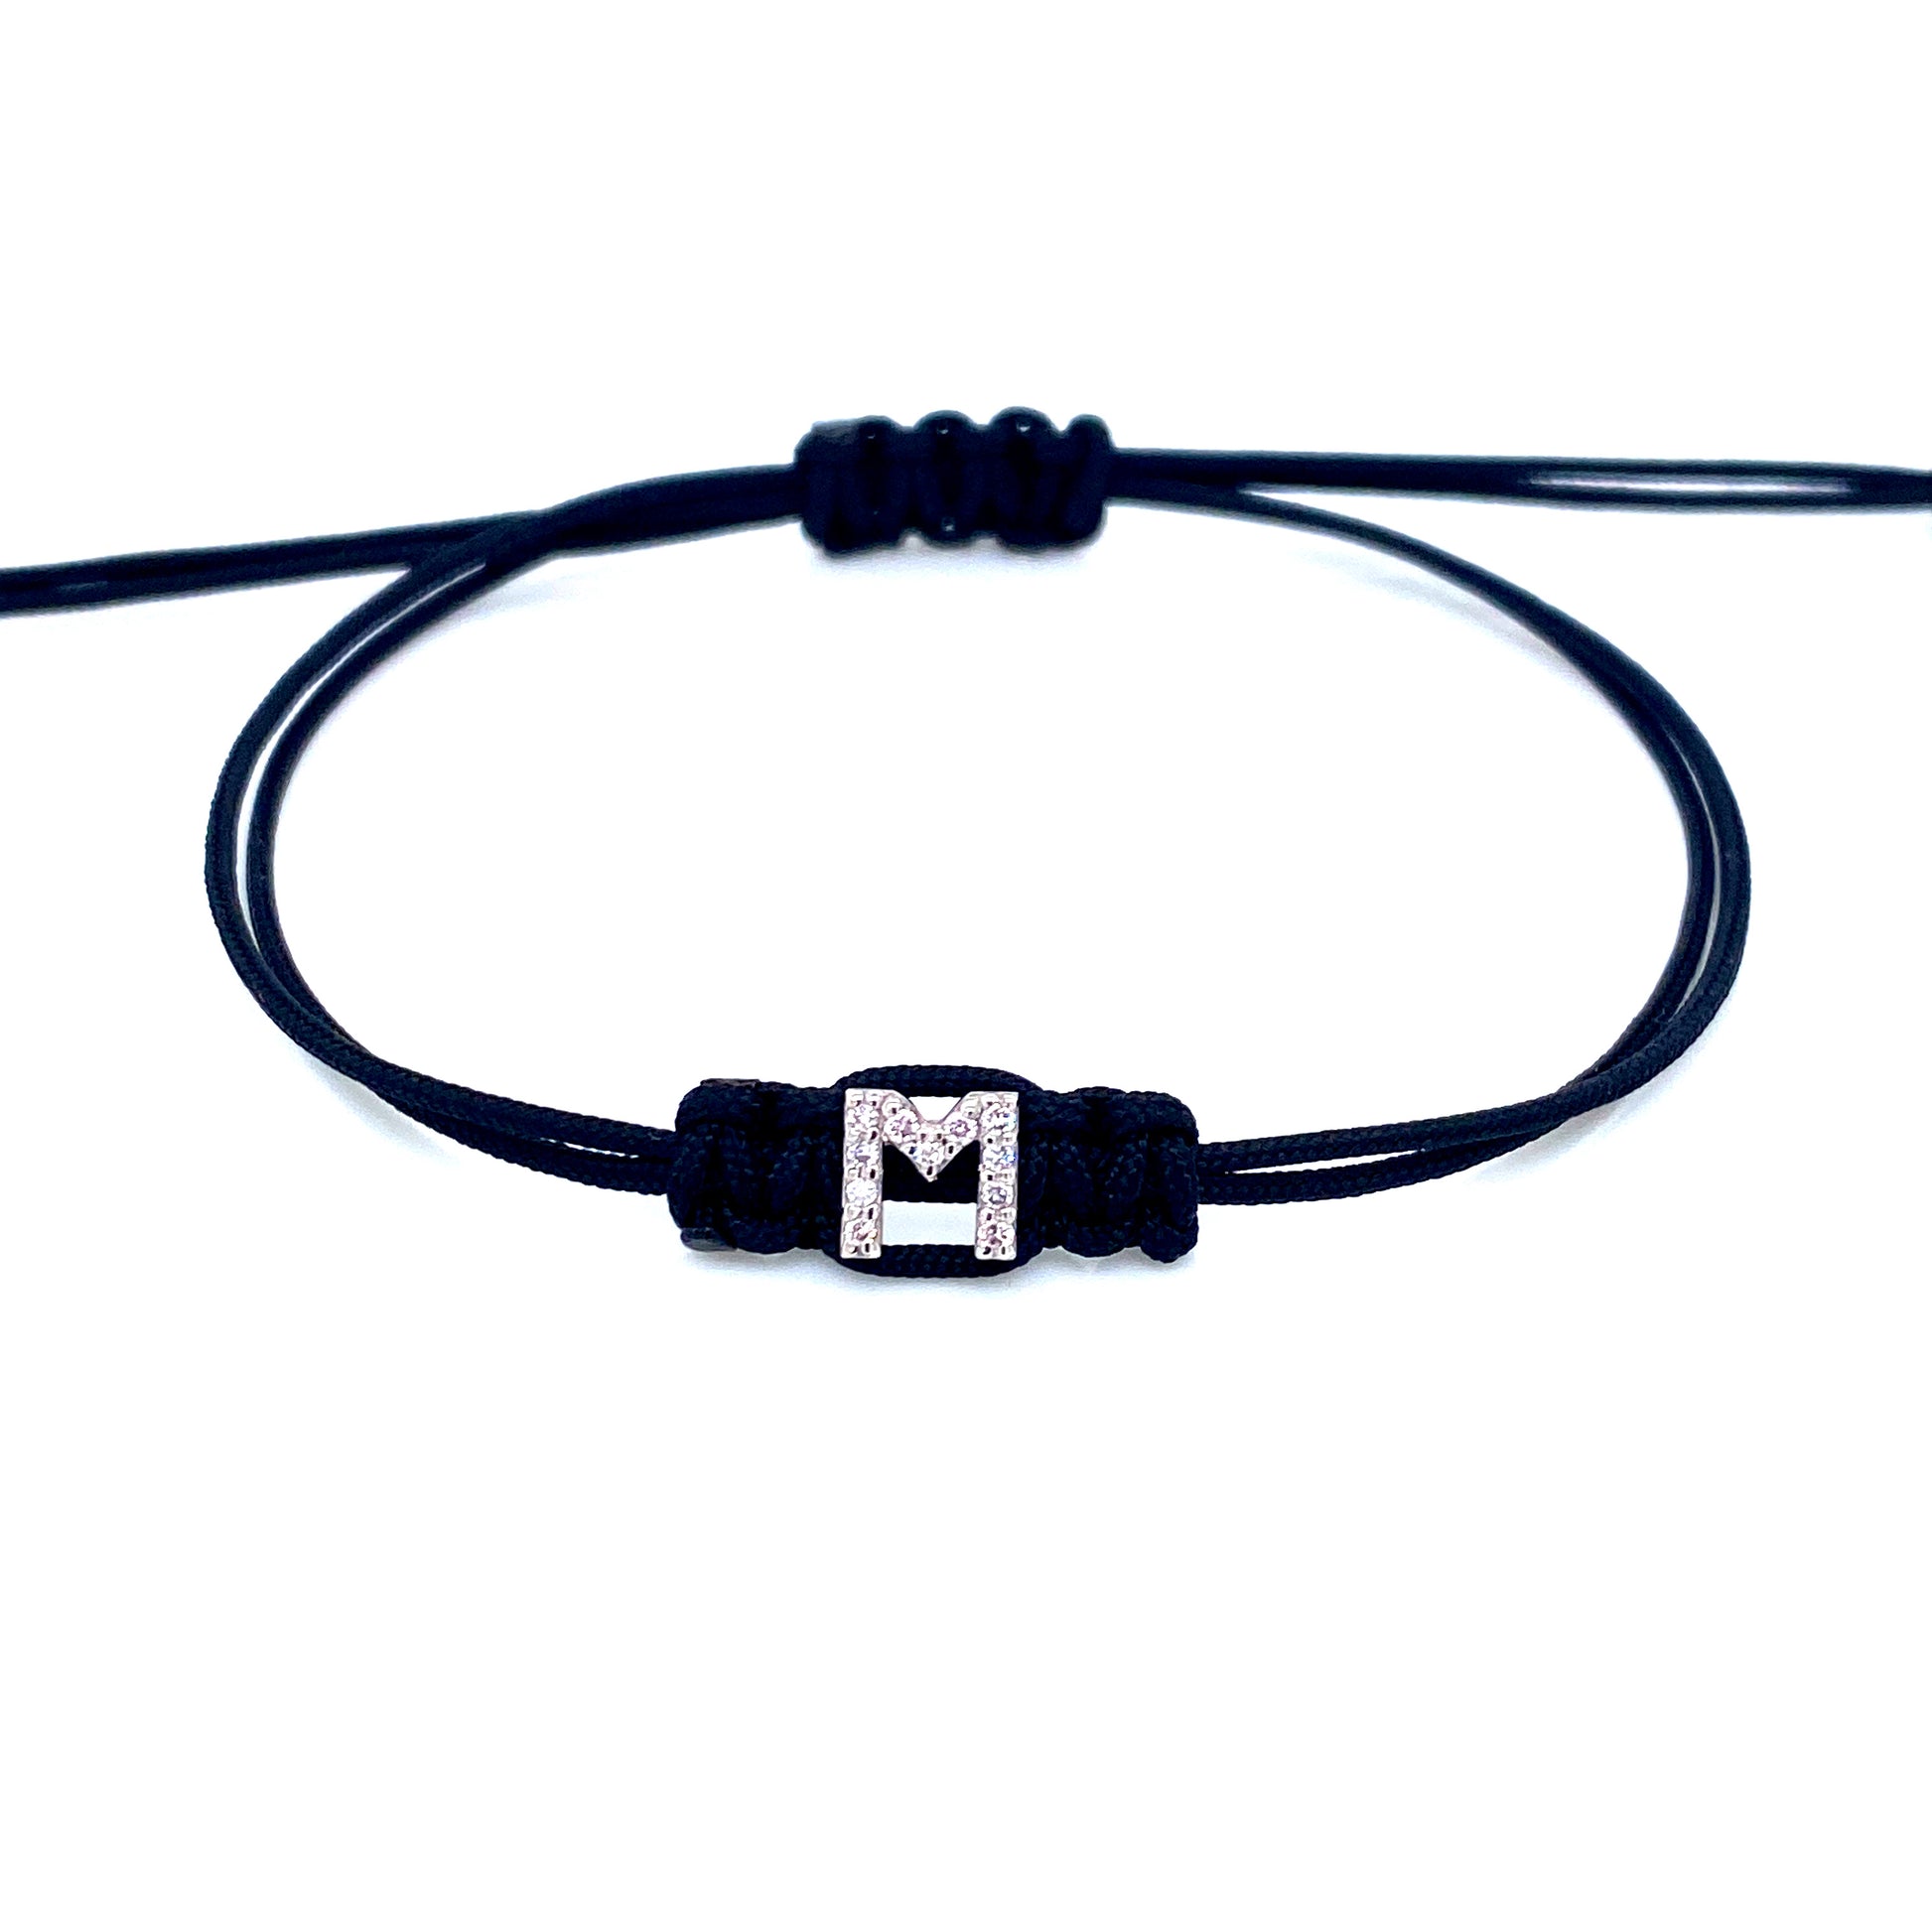 Bracelet With Small Initial M and Diamond | Bernat Rubi | Luby 